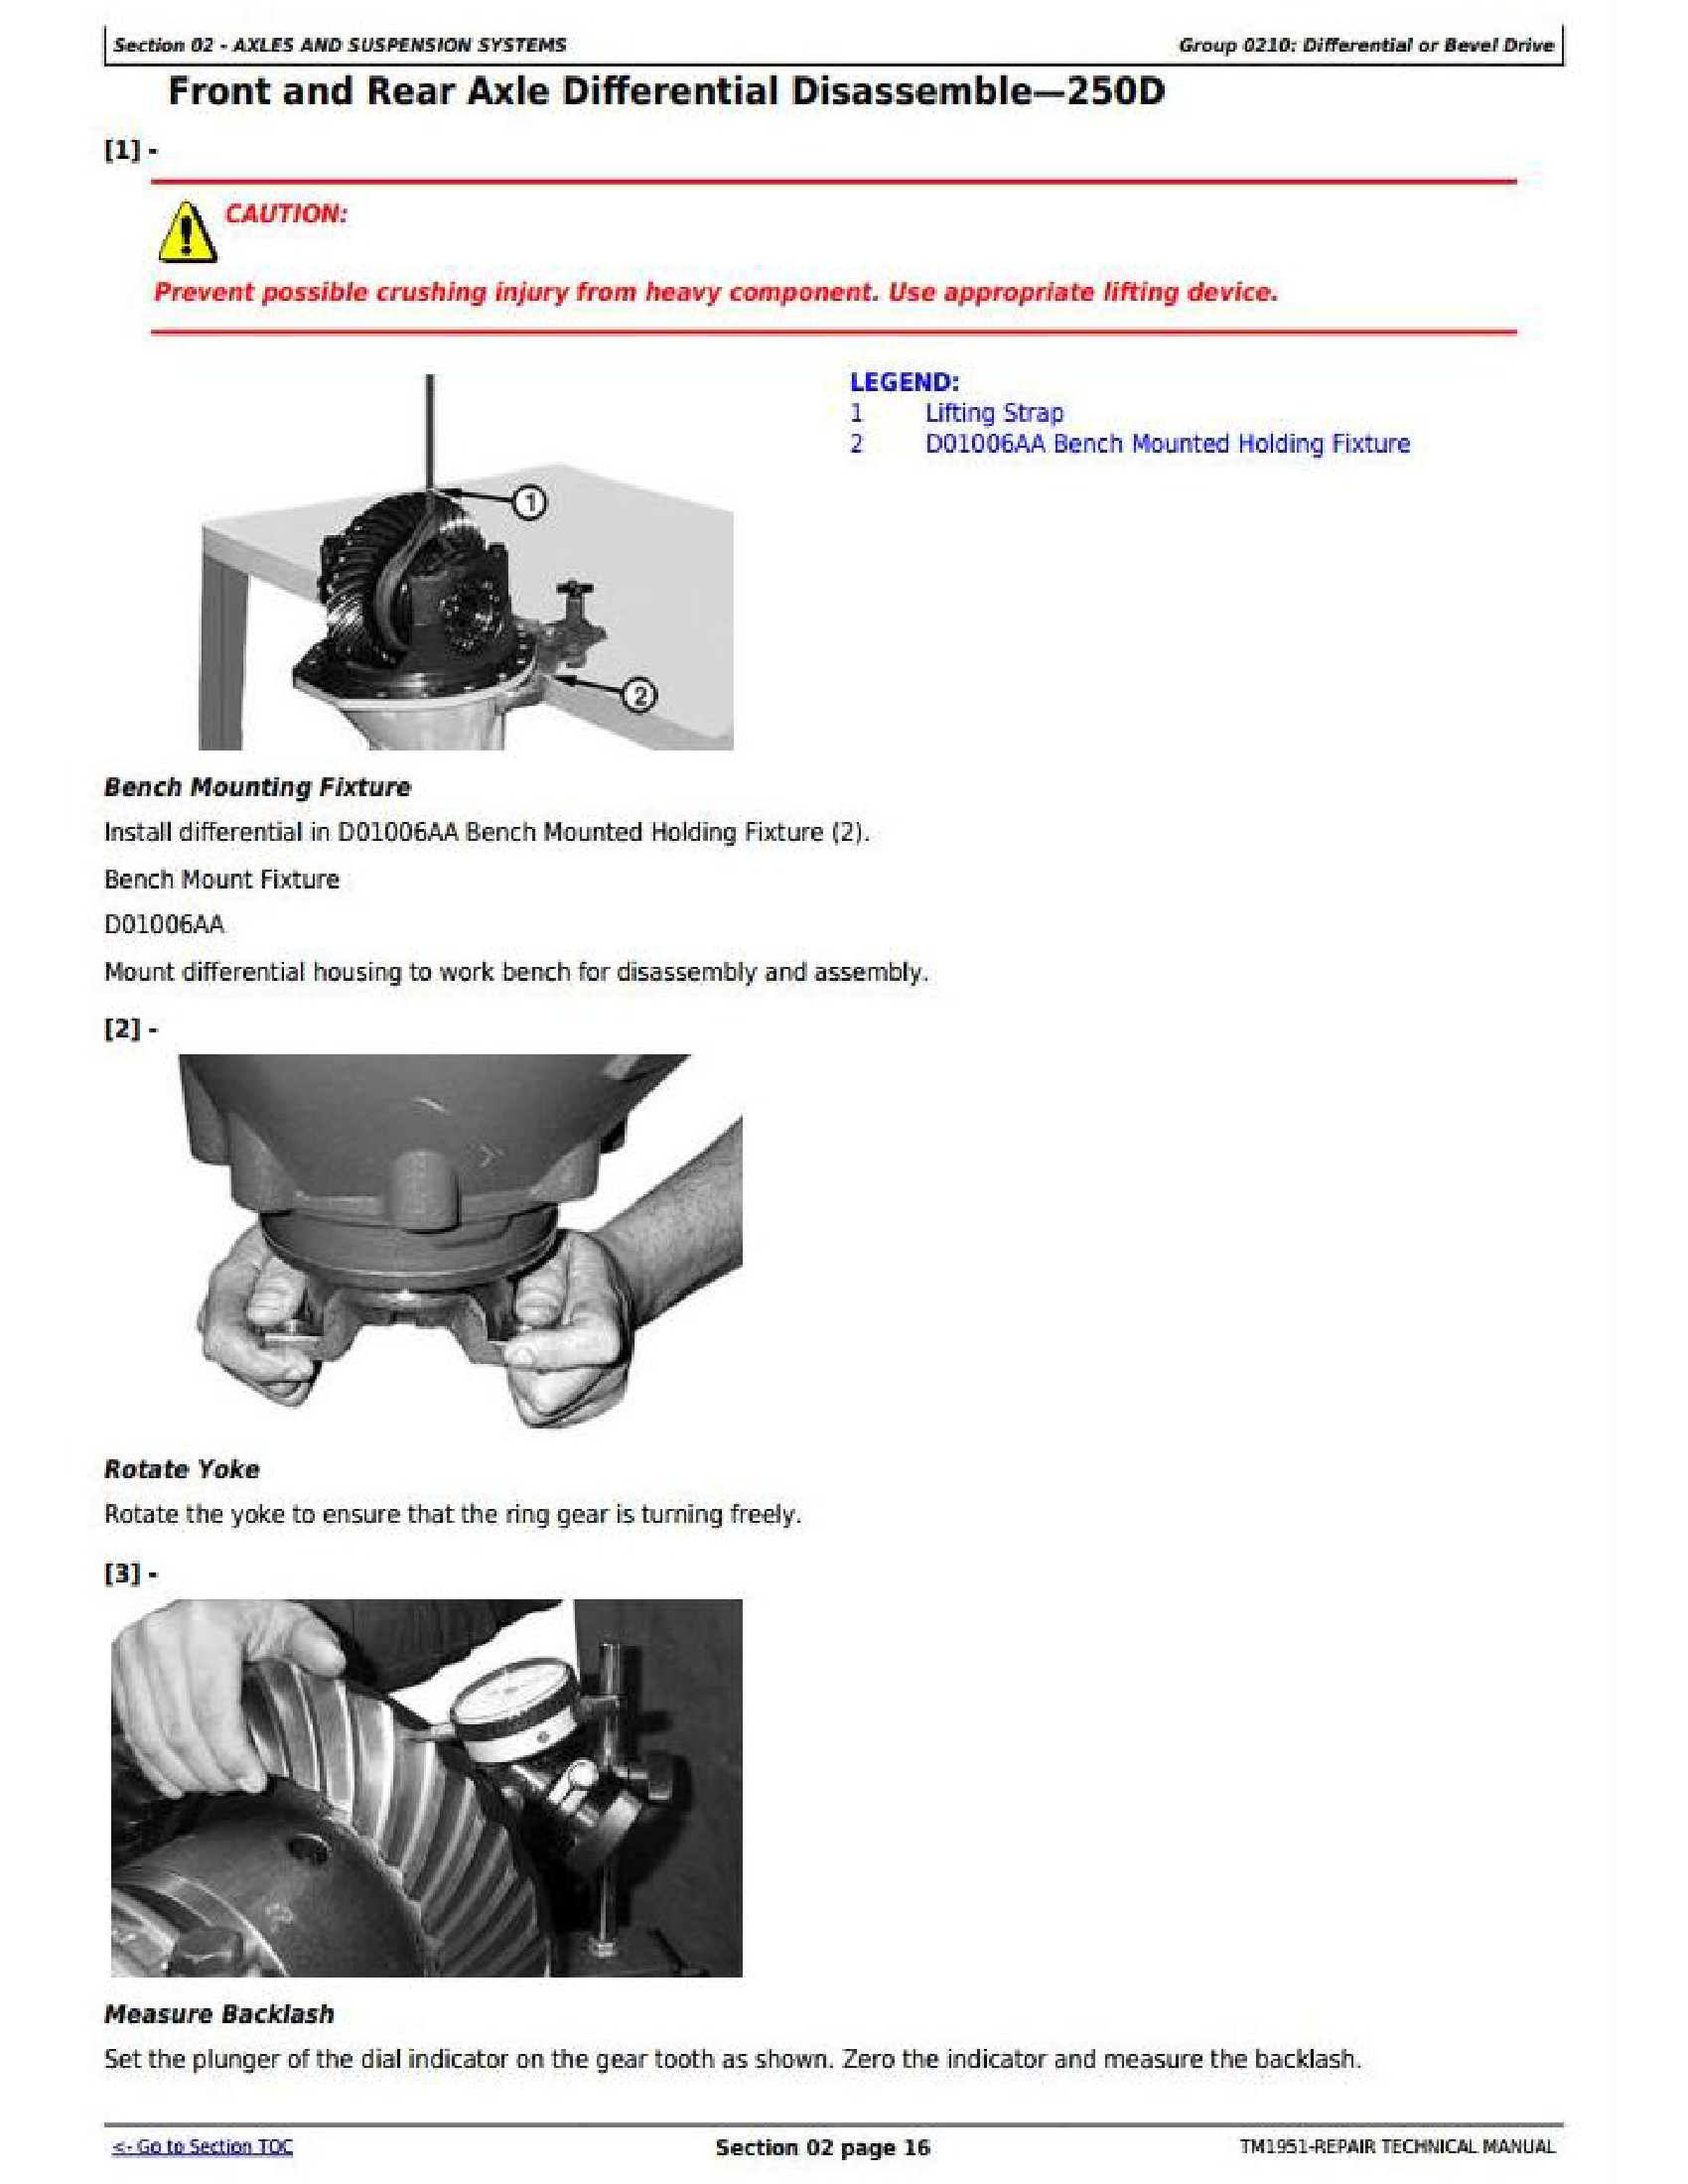 John Deere 250D manual pdf